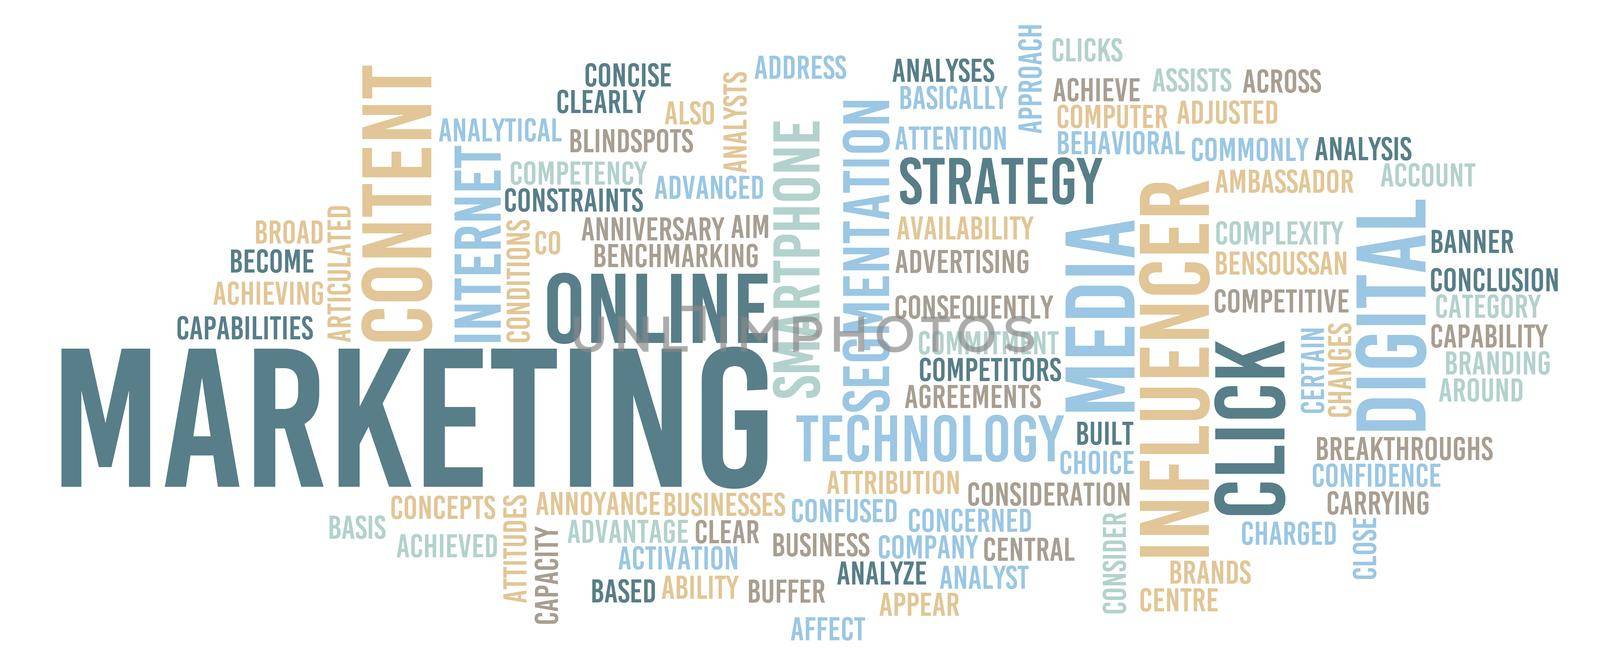 Online Marketing by kentoh